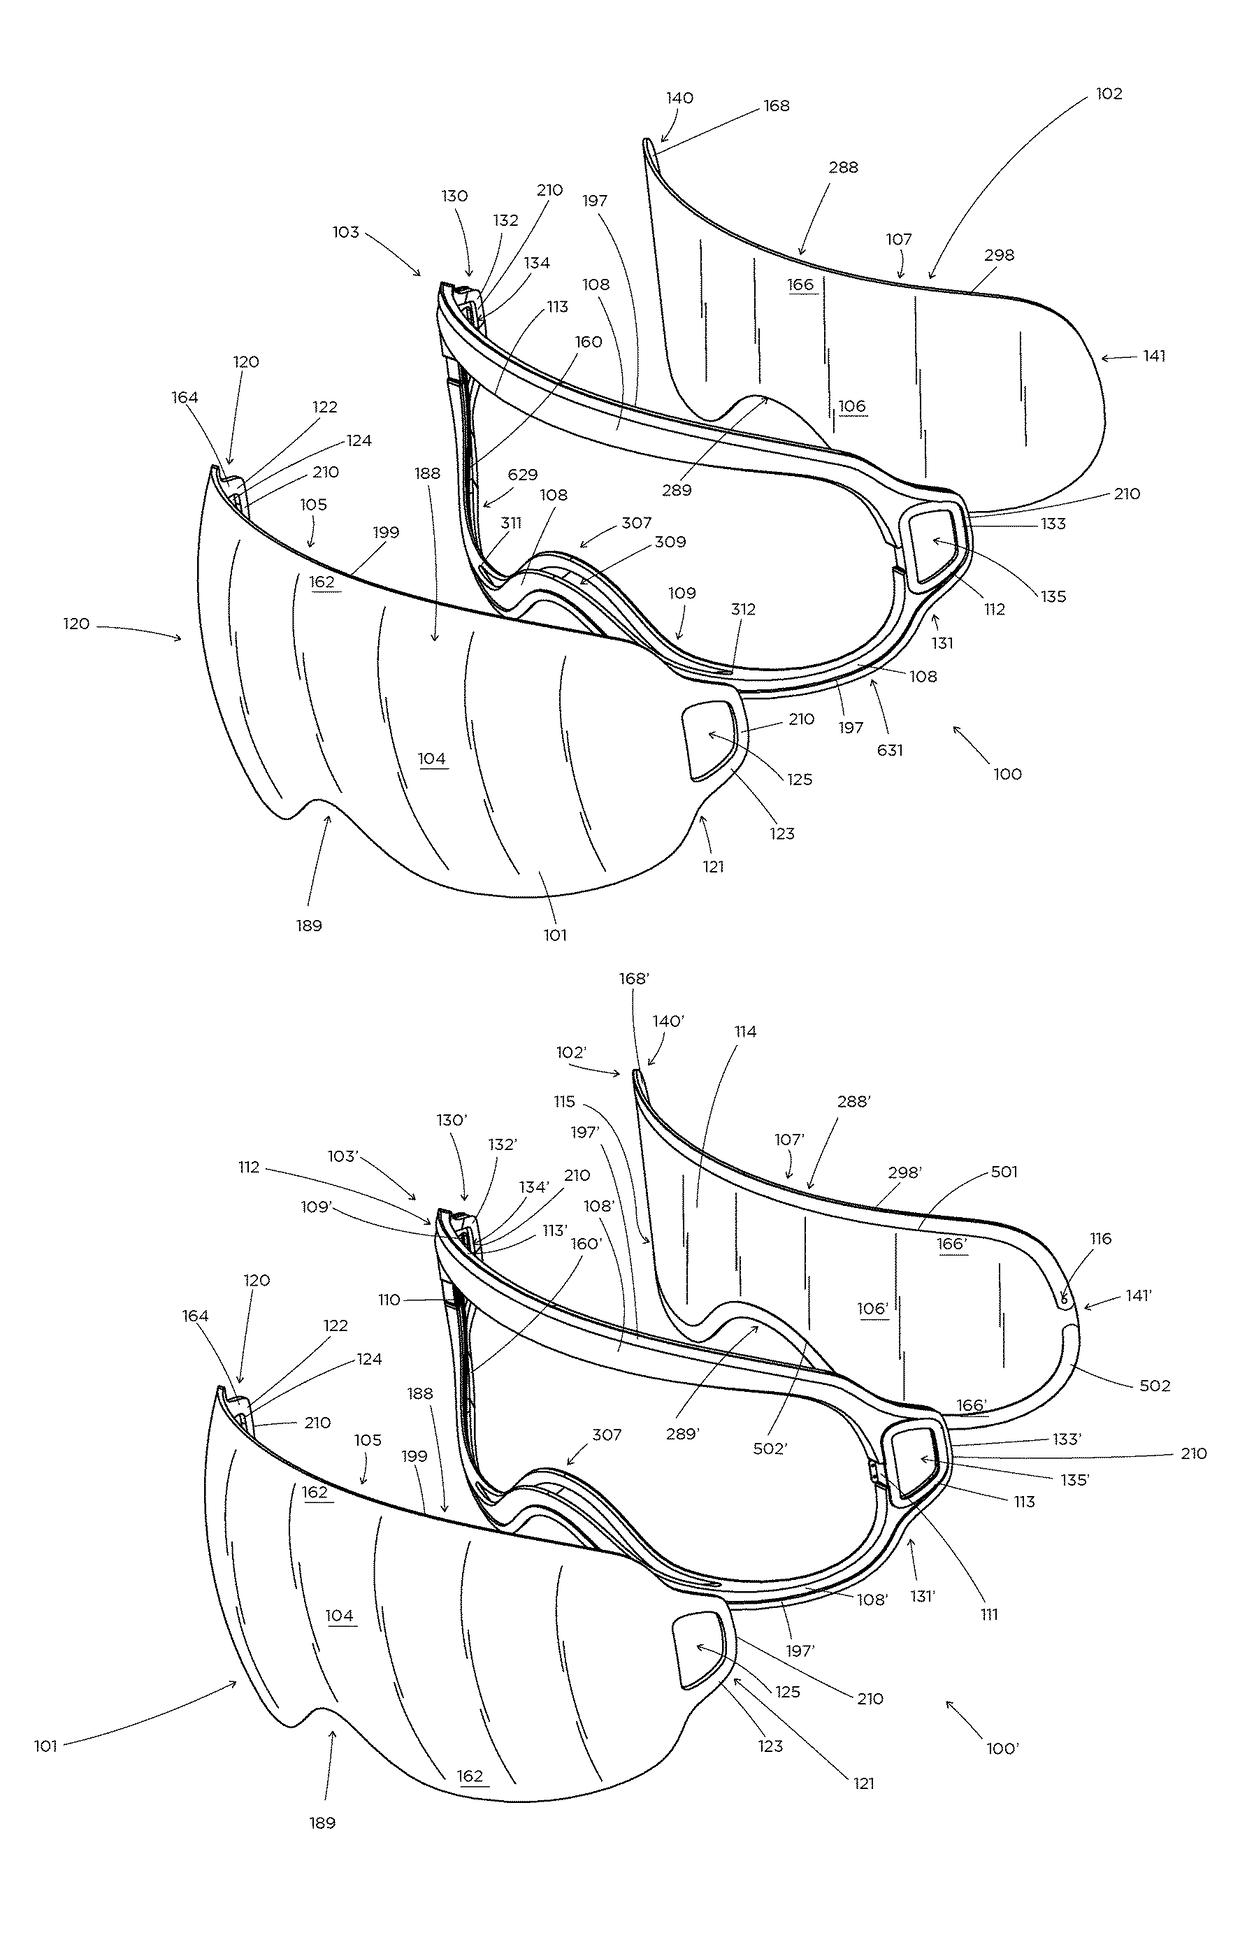 Multi-pane, multi-geometry goggle eye-shield